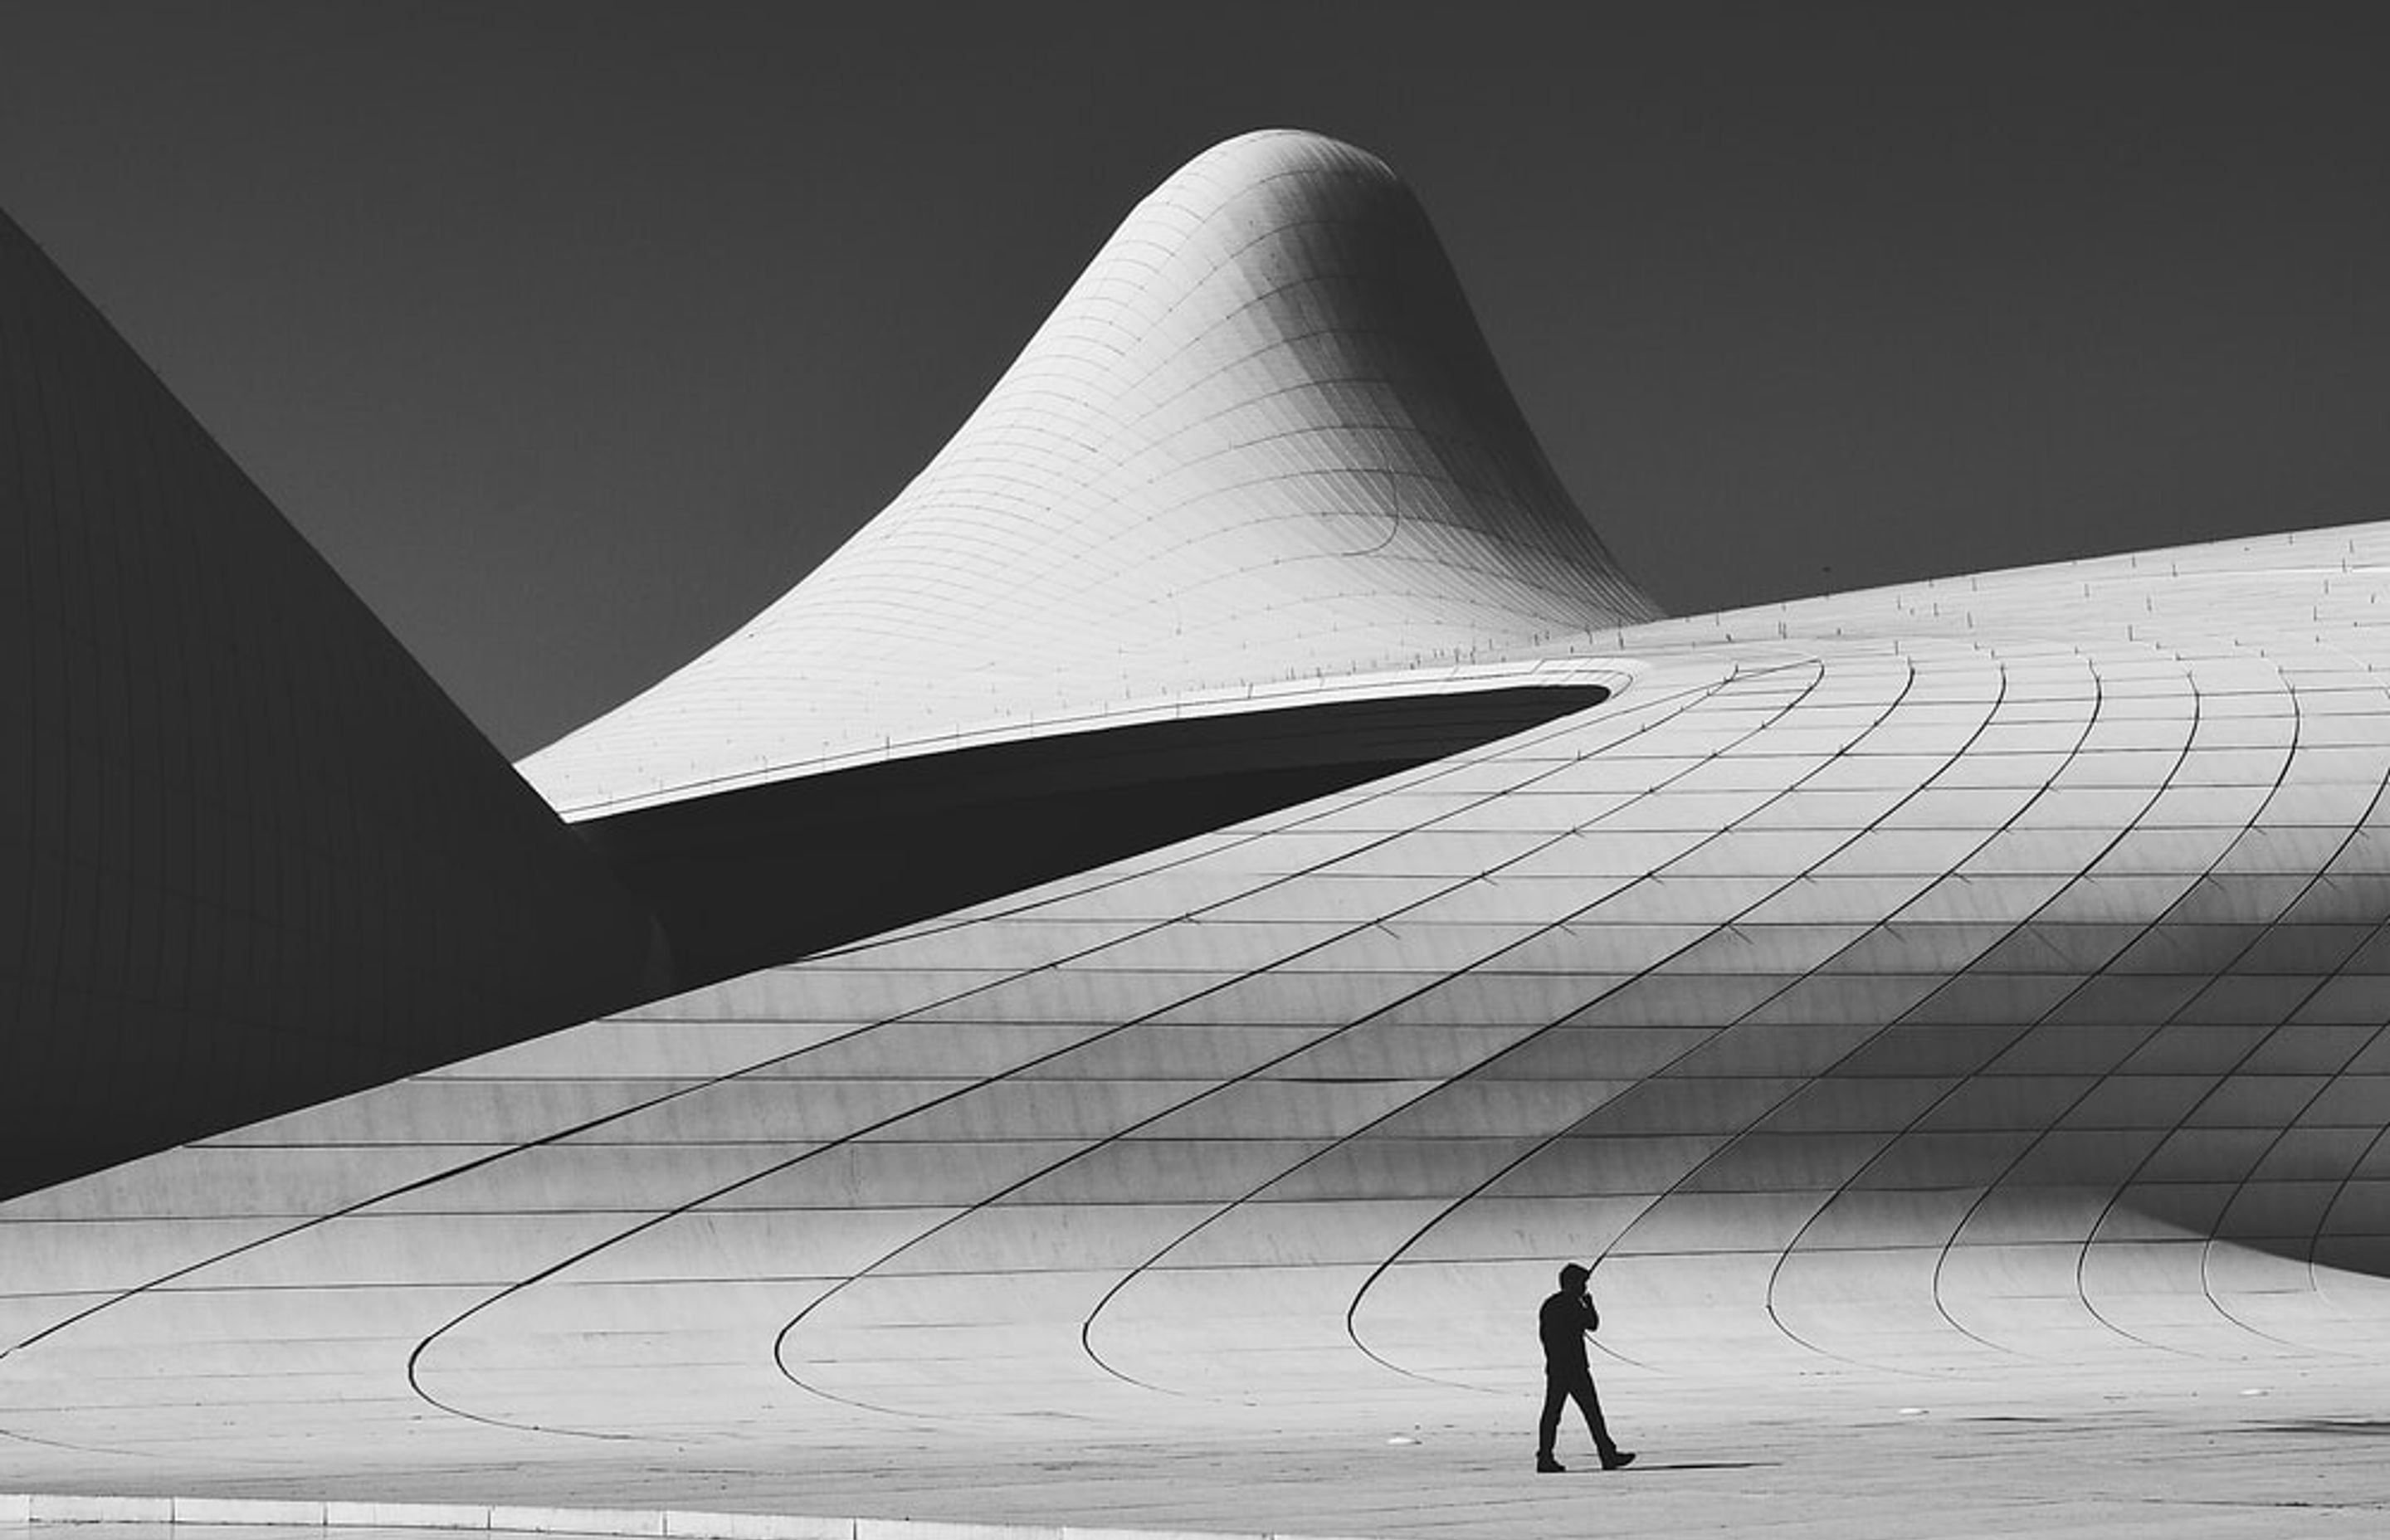  The Heydar Aliyev Center, designed by Zaha Hadid